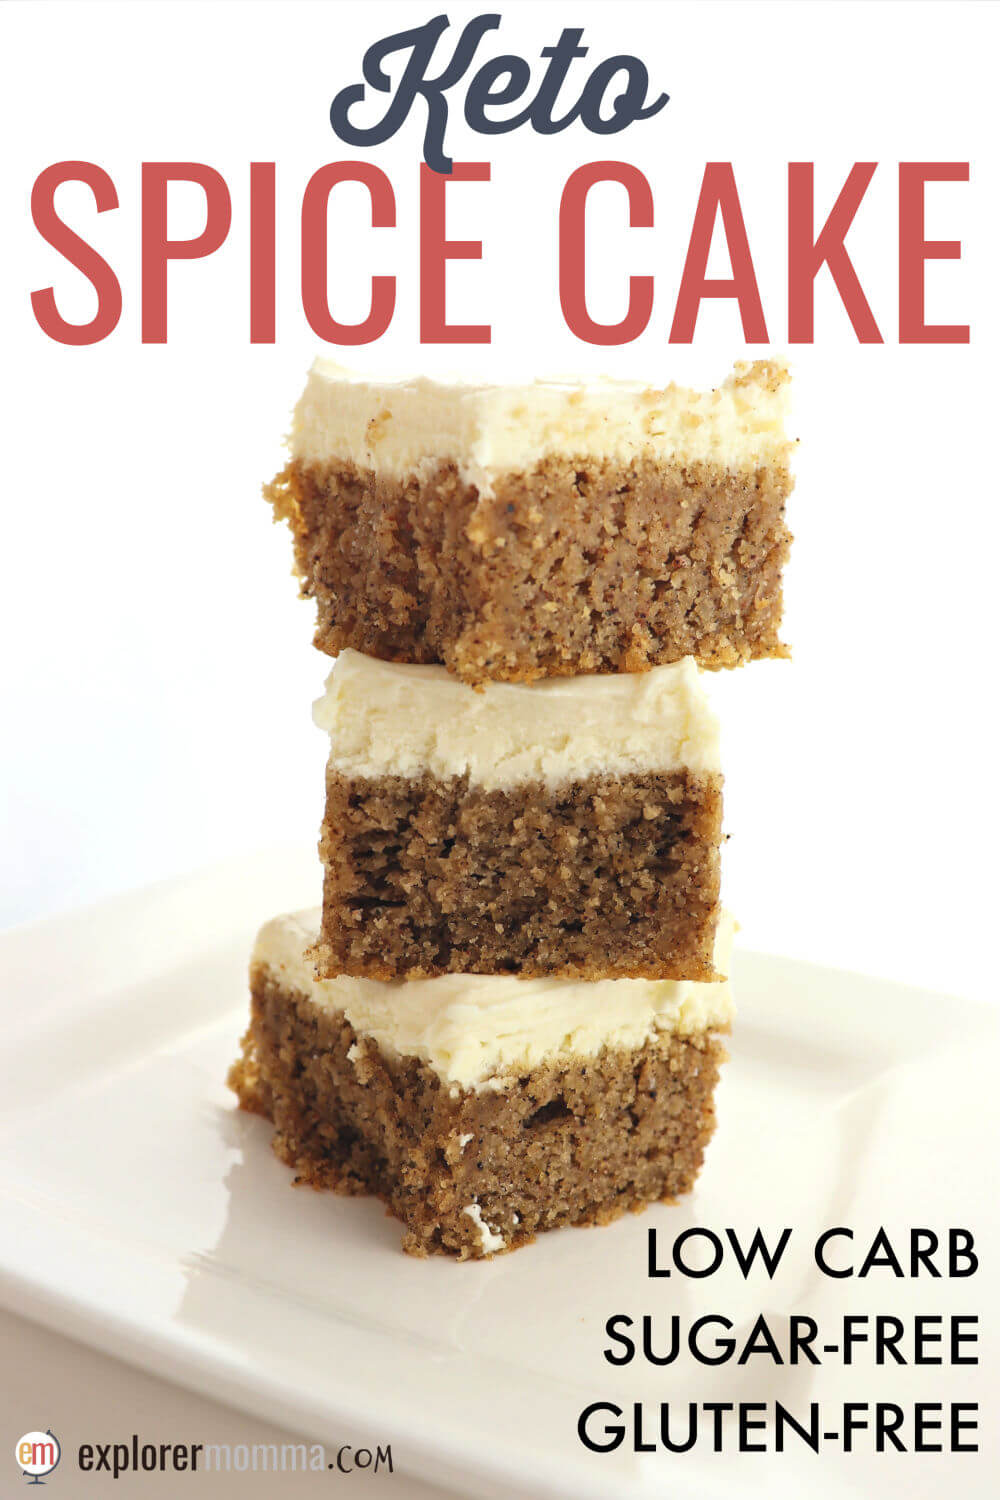 Posh spice cake recipe | BBC Good Food